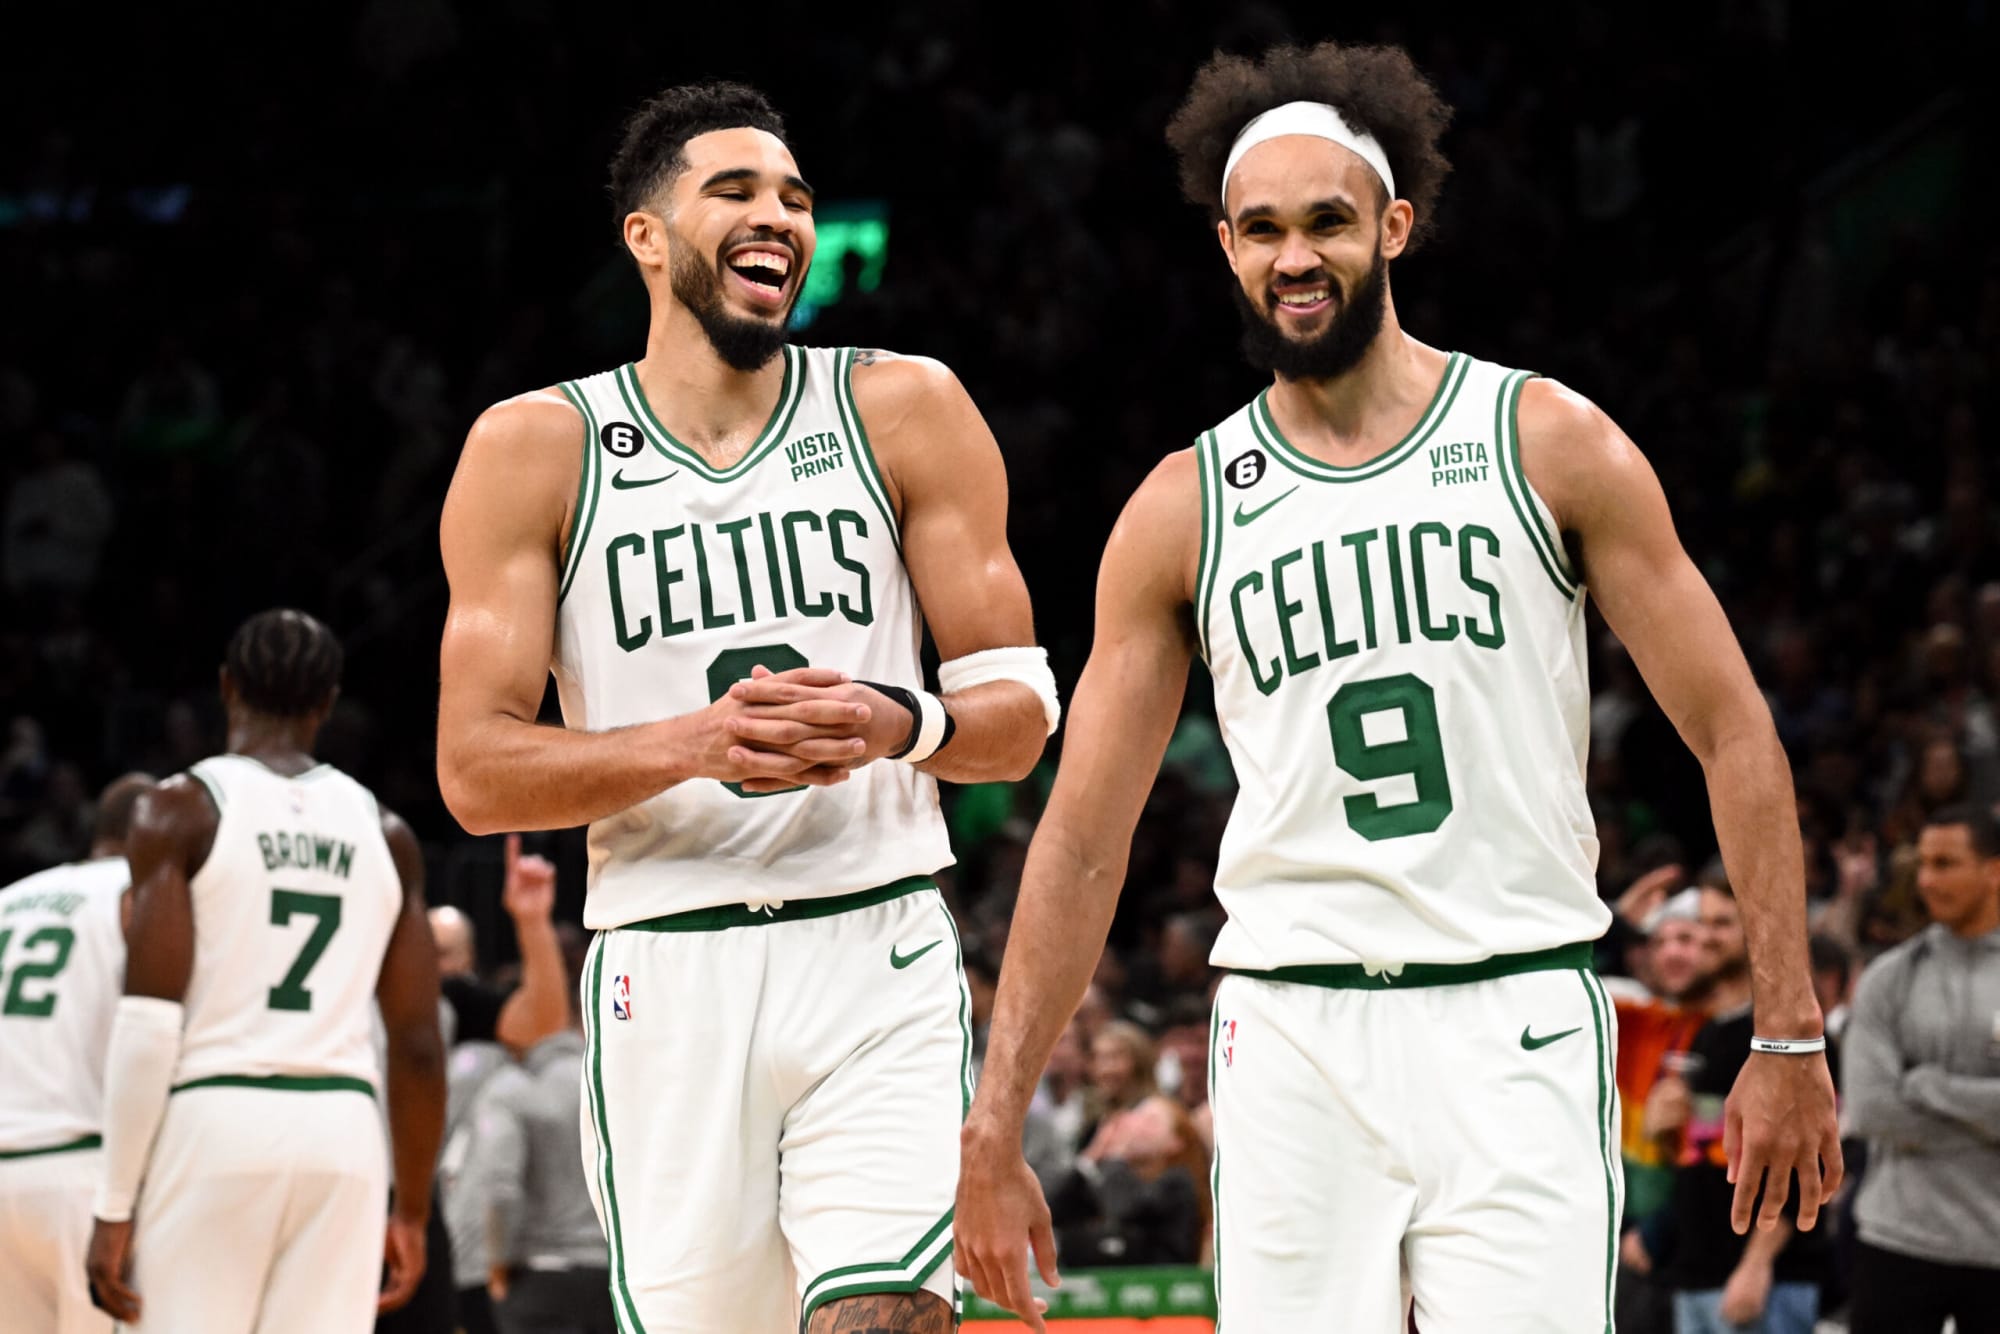 Boston Celtics Starting Lineup